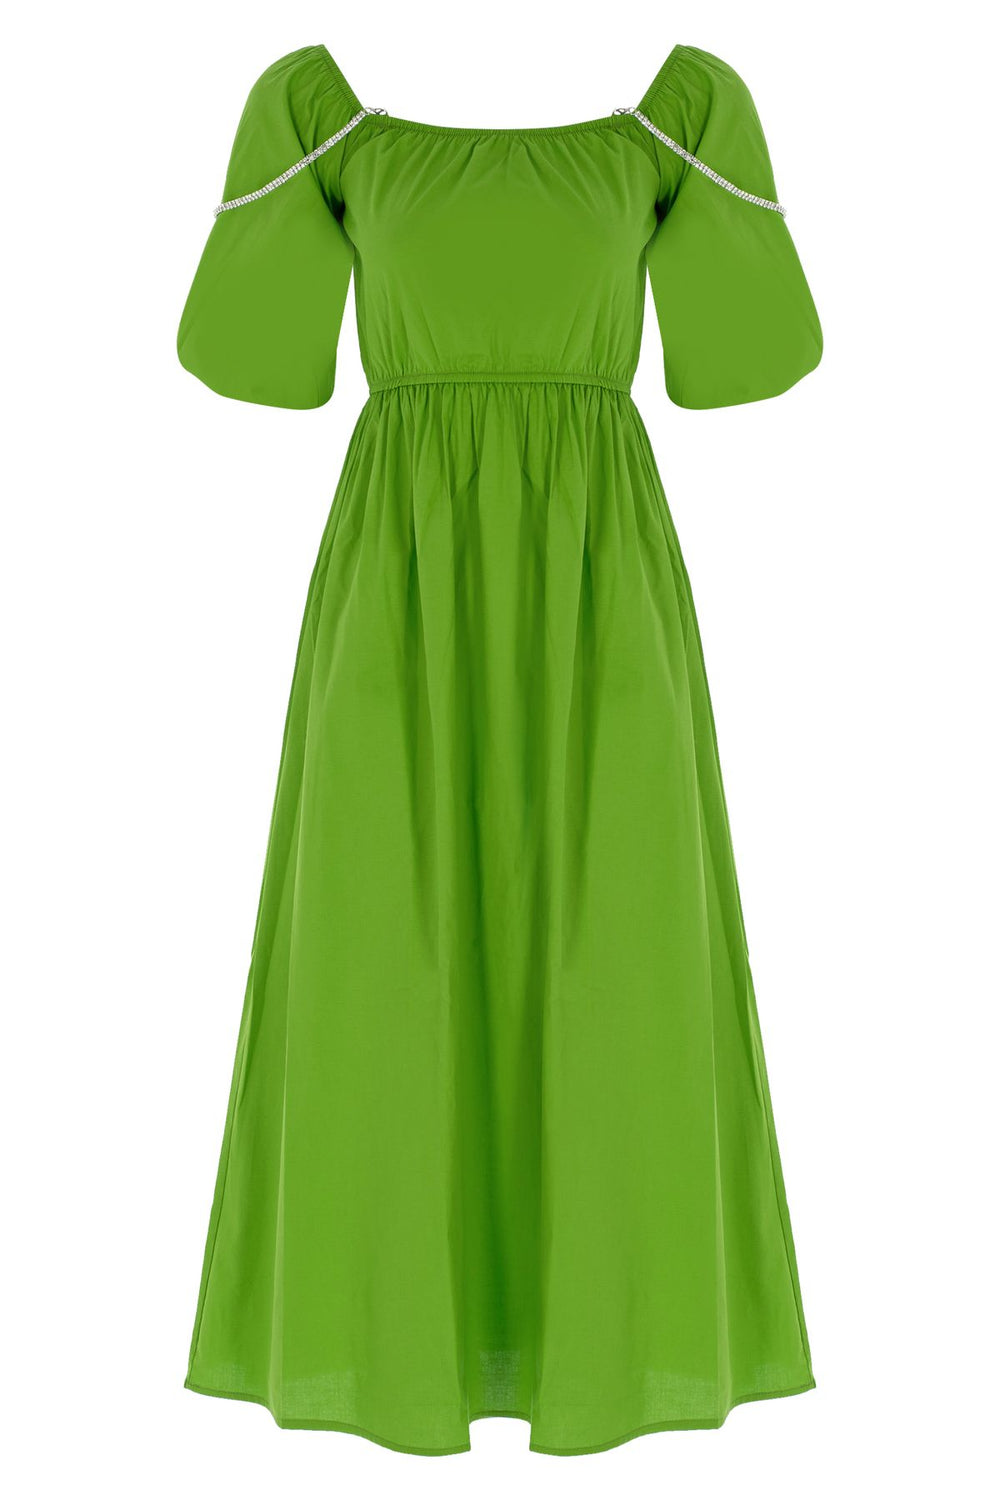 Accessory Detailed Midi Length Dress Green